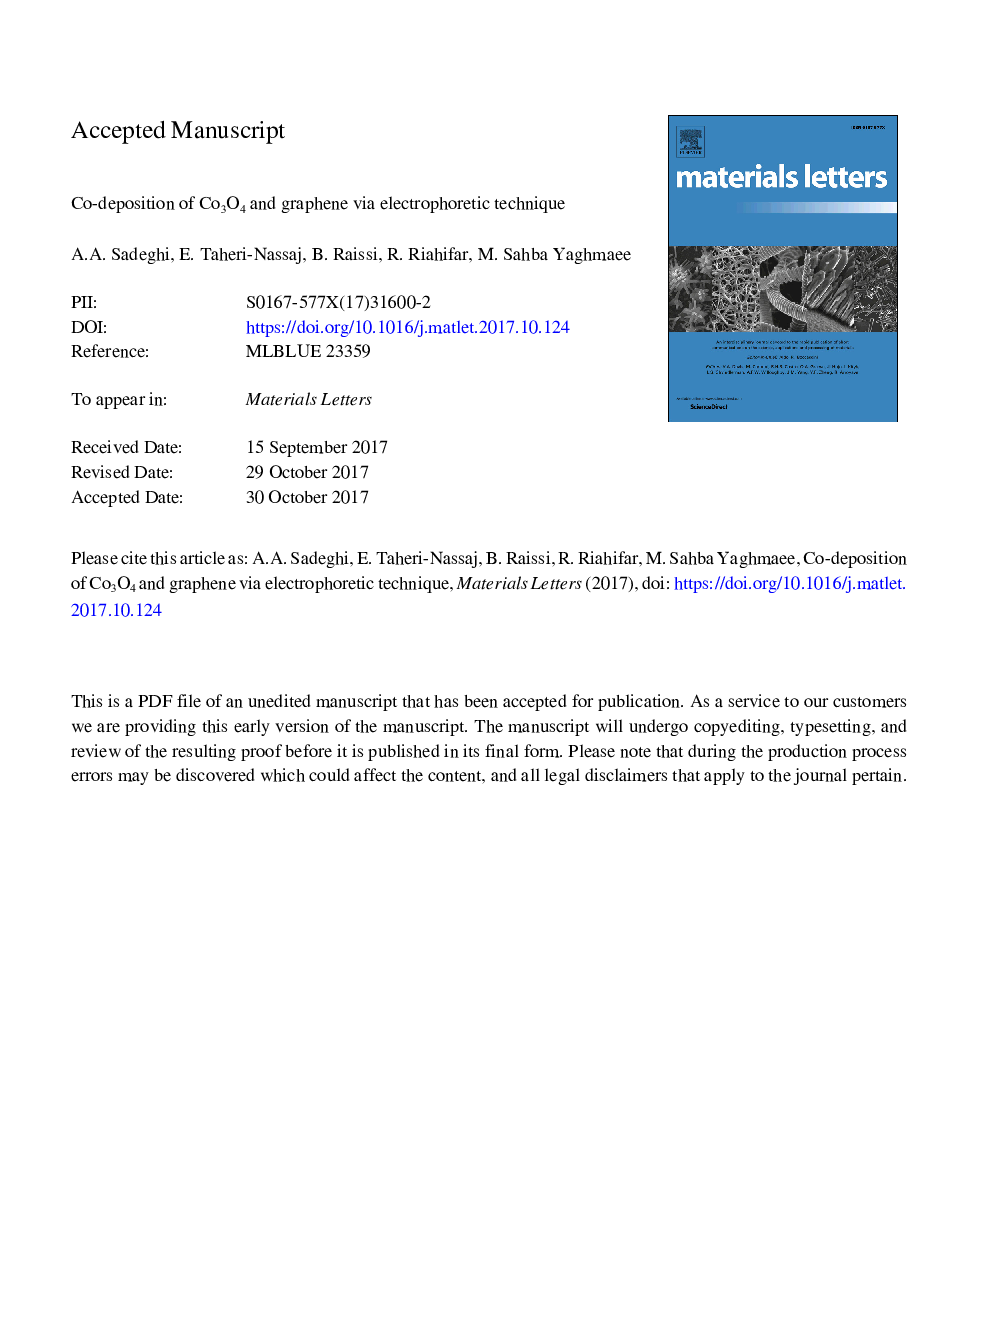 Co-deposition of Co3O4 and graphene via electrophoretic technique